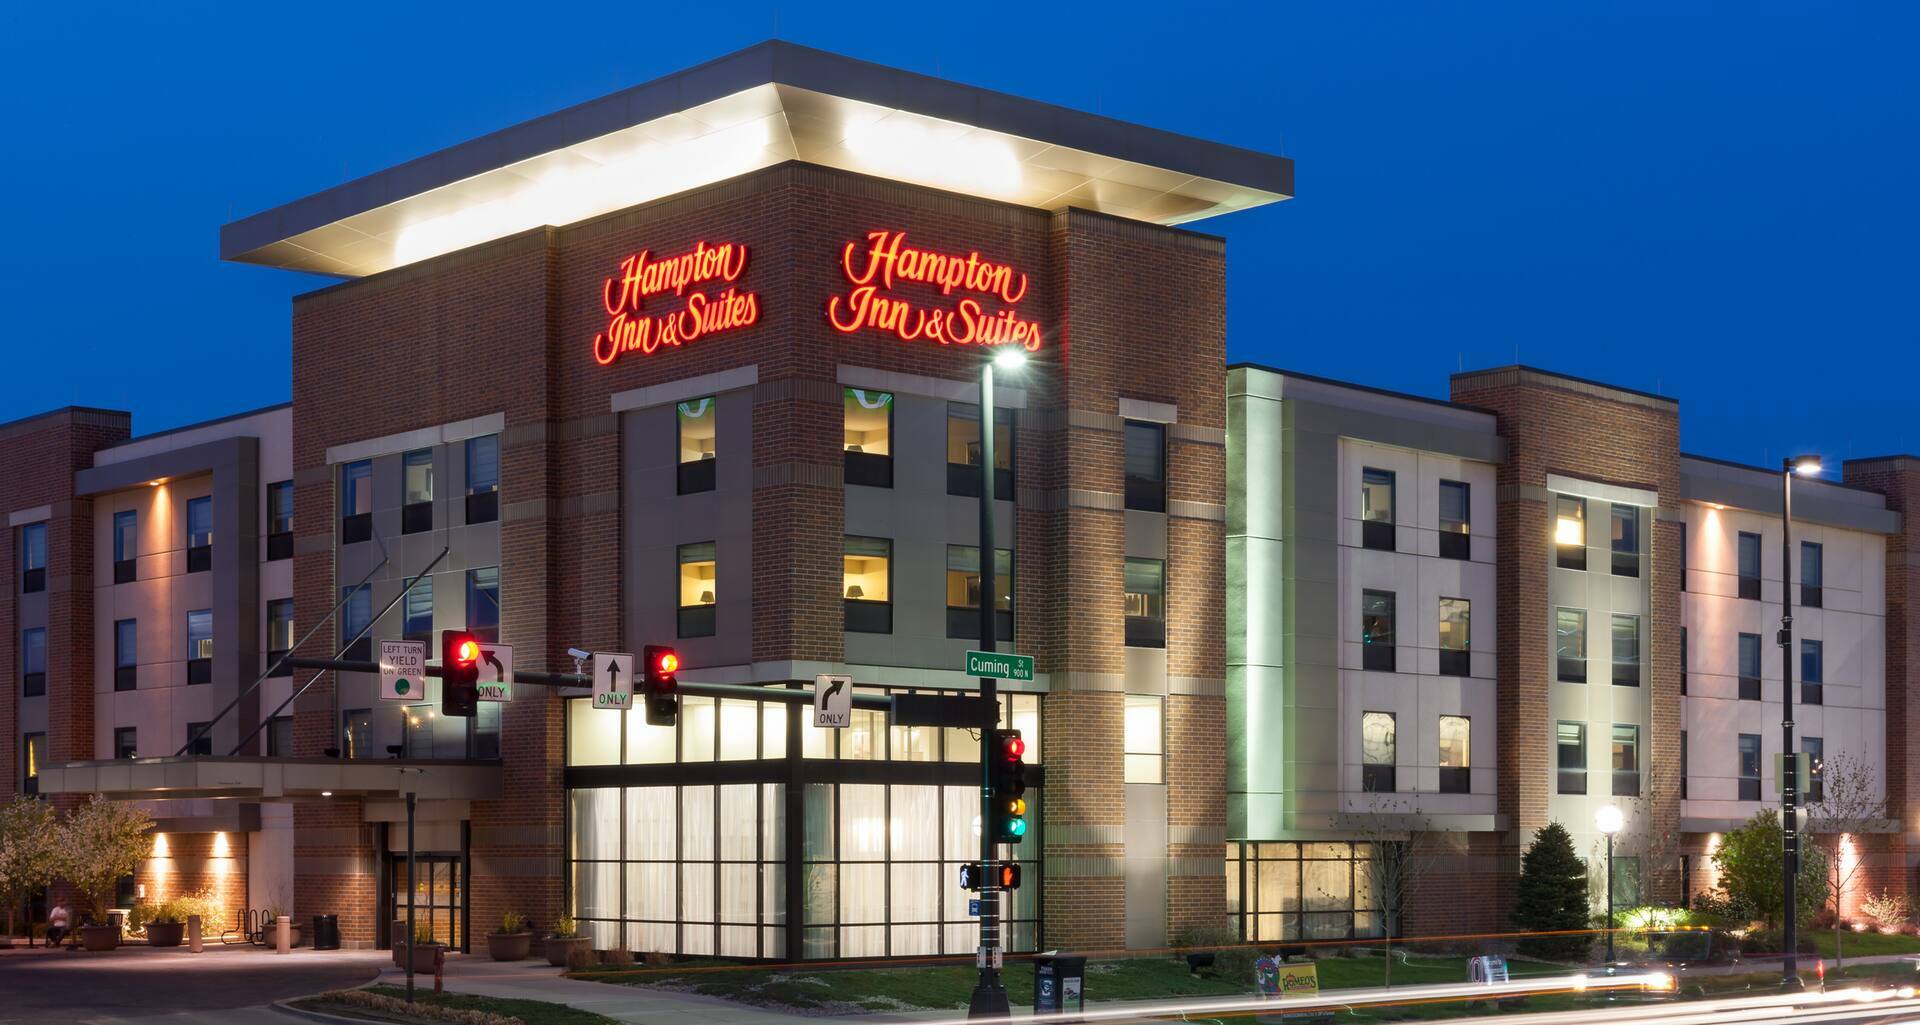 Photo of Hampton Inn & Suites Omaha-Downtown, Omaha, NE